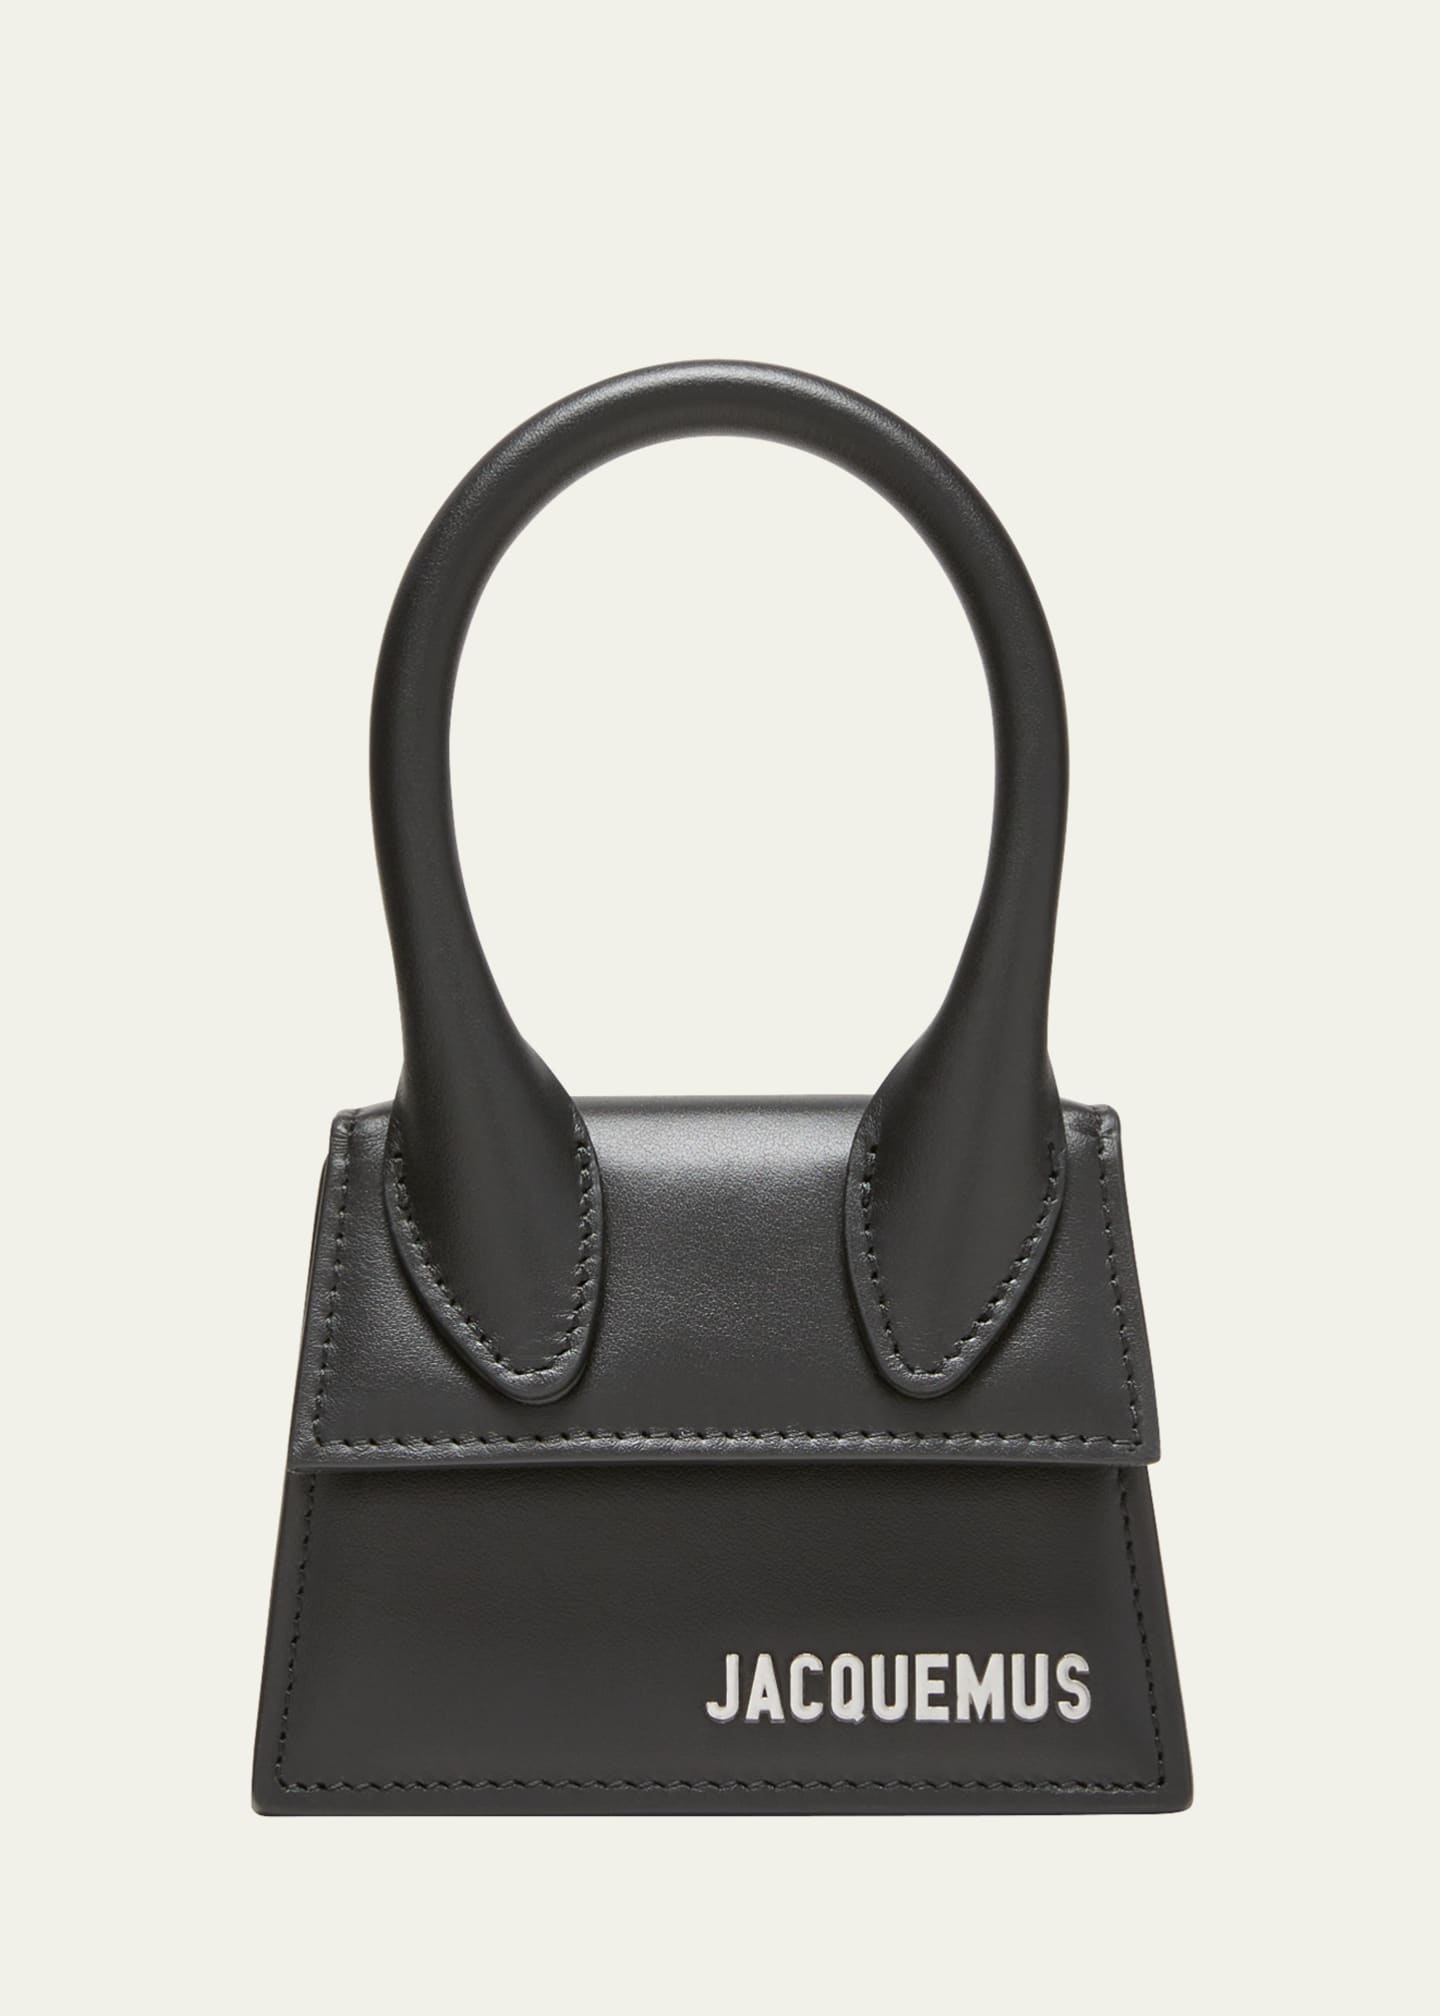 Jacquemus Le Chiquito Homme Mini Tote Bag